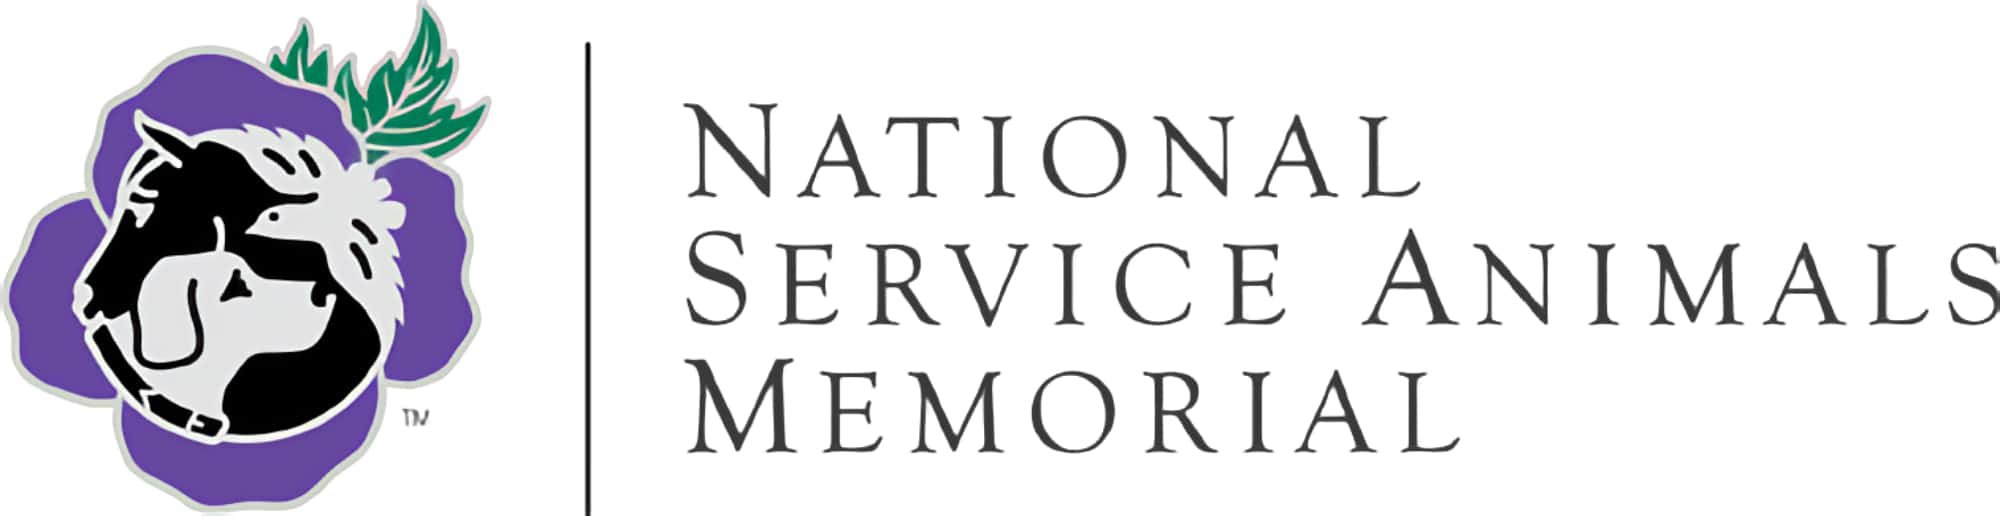 National Service Animals Memorial (Copy)